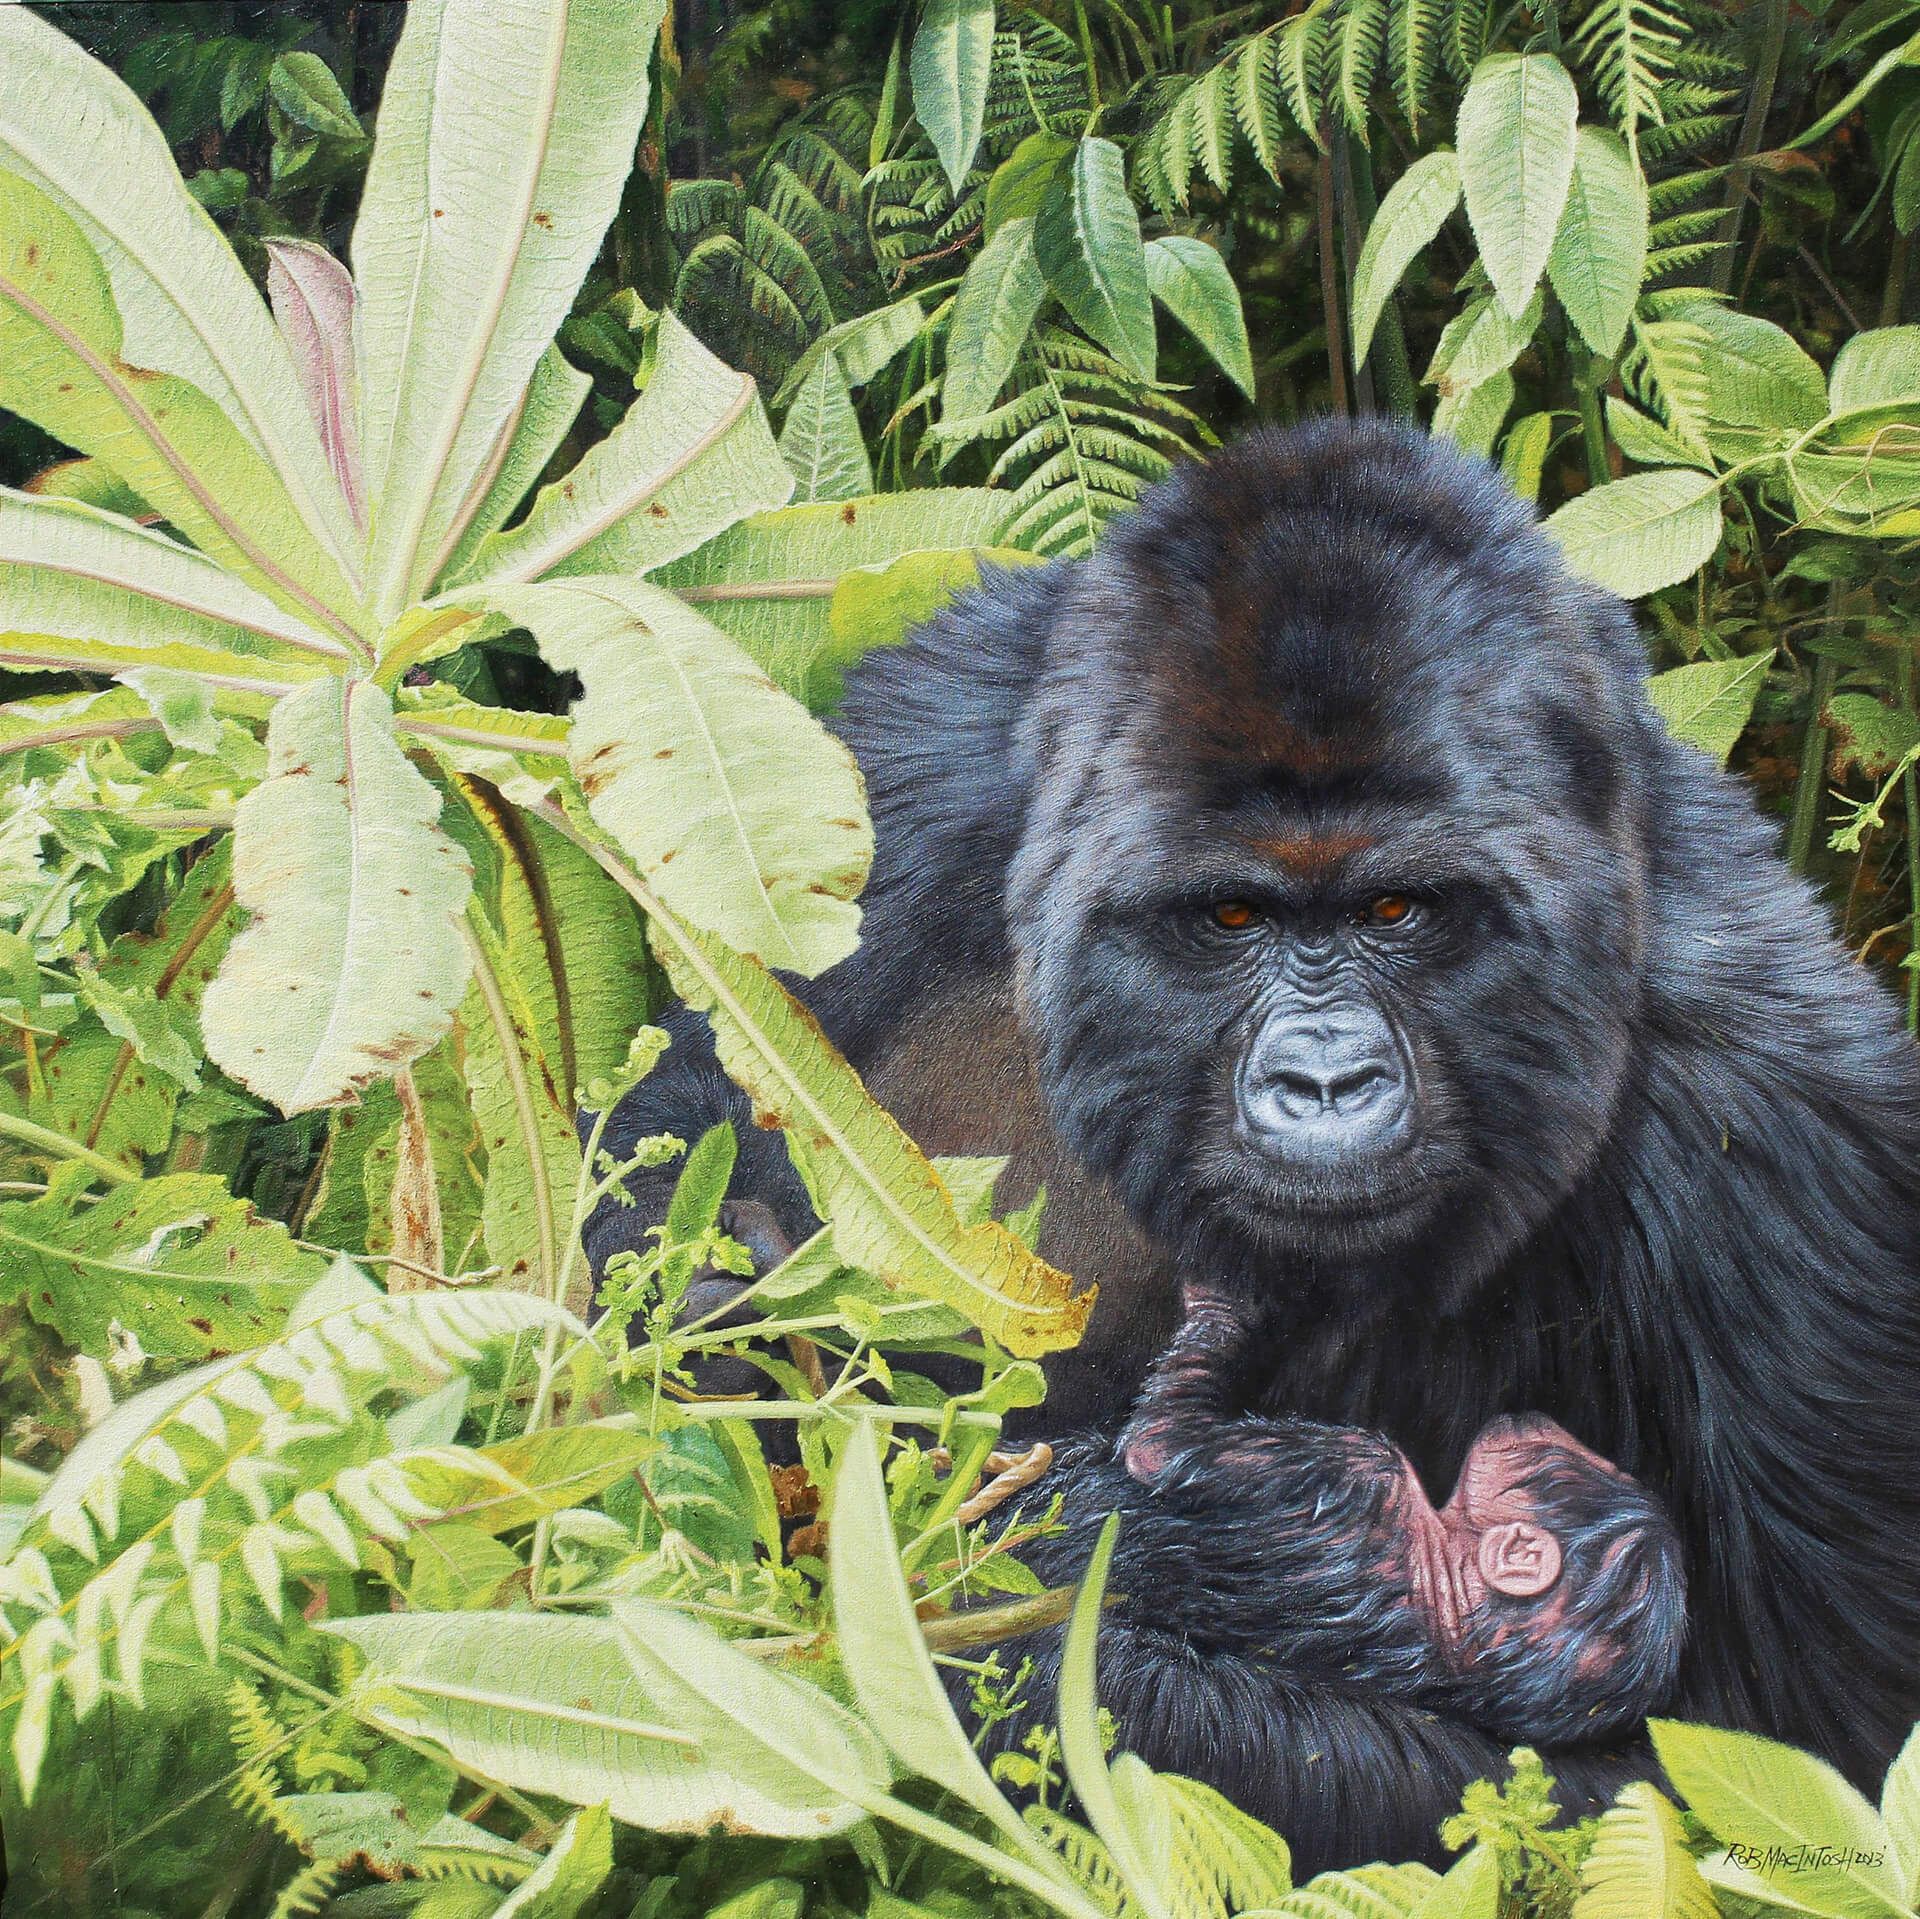 Photorealistic painting of gorilla holding her newborn infant